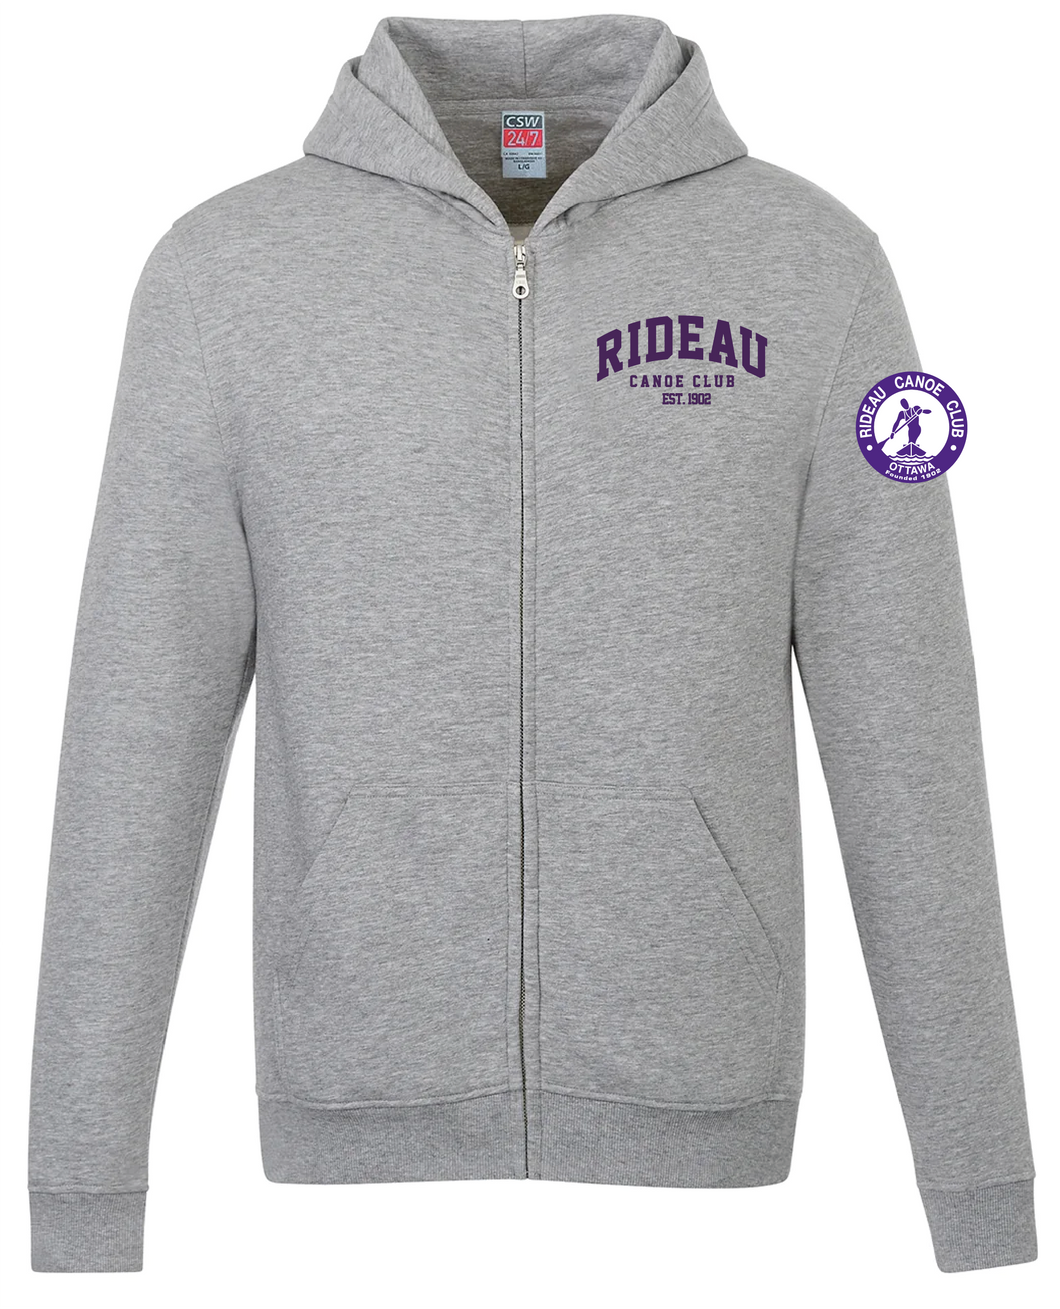 Rideau Canoe Club - Full-Zip Hooded Sweatshirt